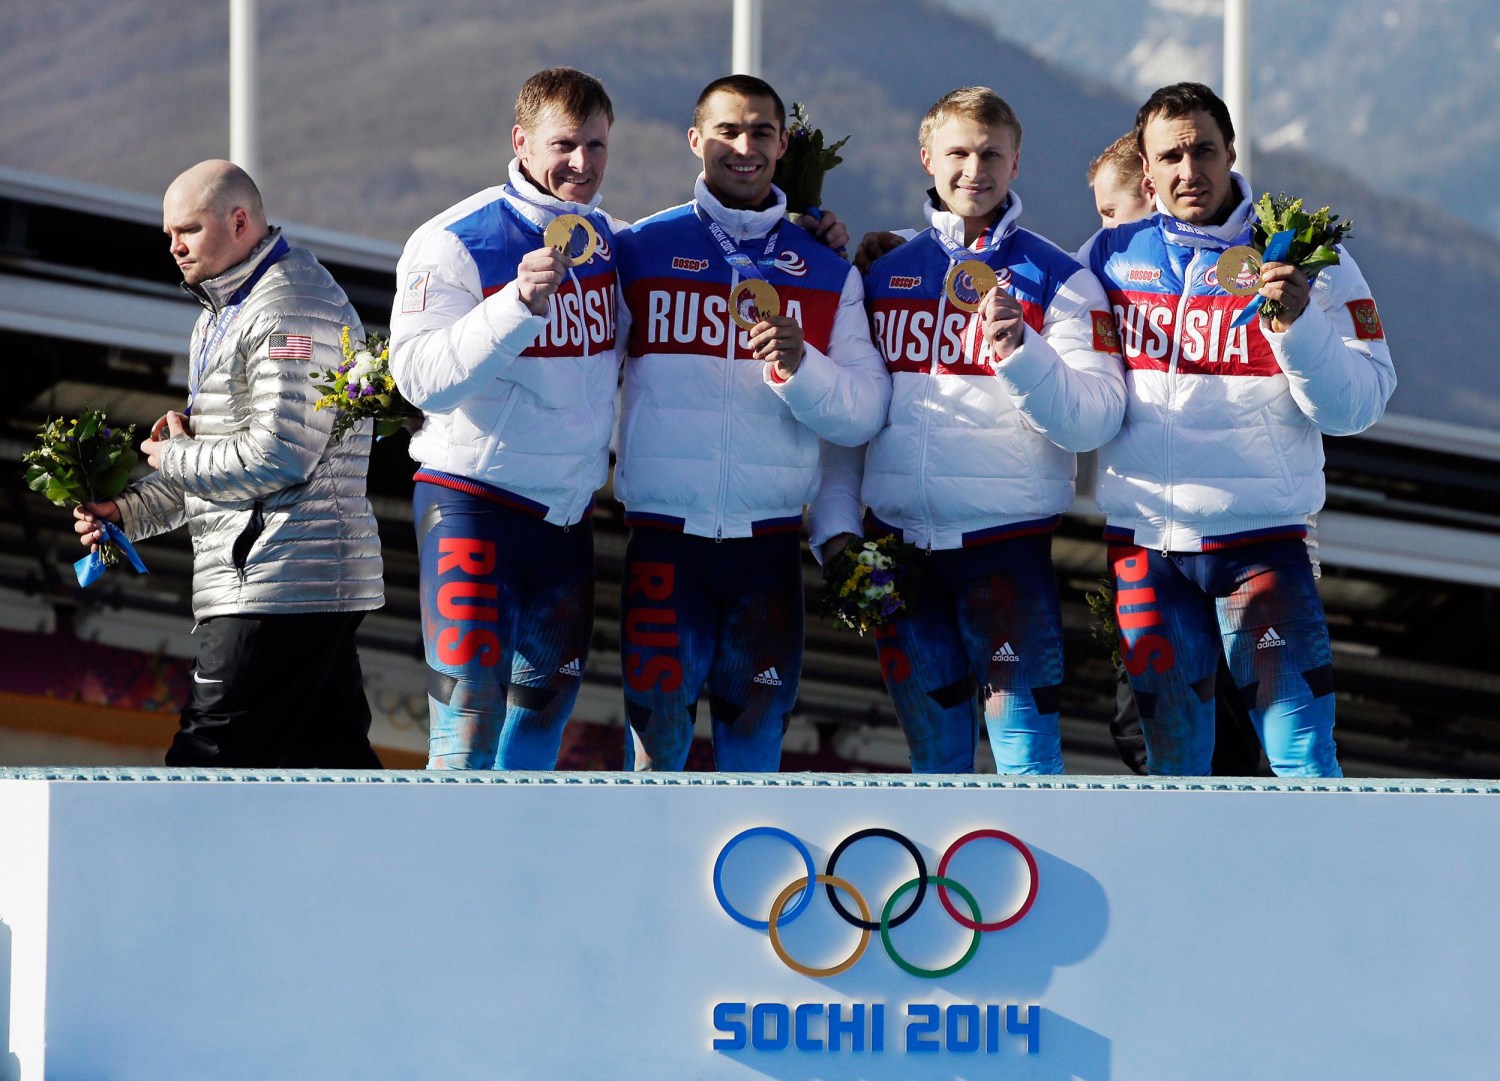 Sochi 2014 Event Olympics Jerseys for sale